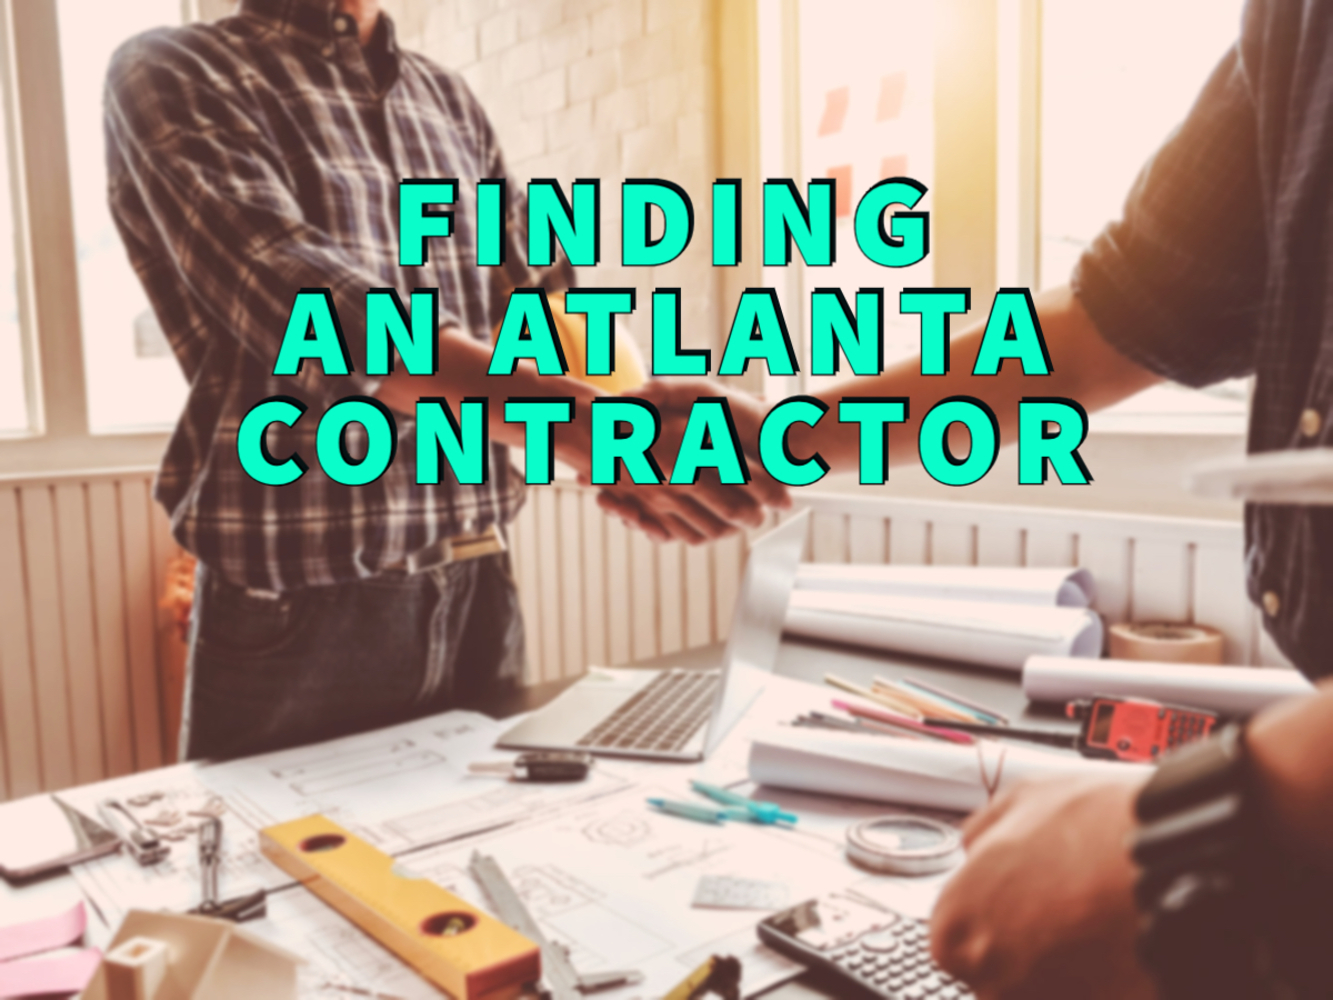 Finding an atlanta contractor written over professional handshake